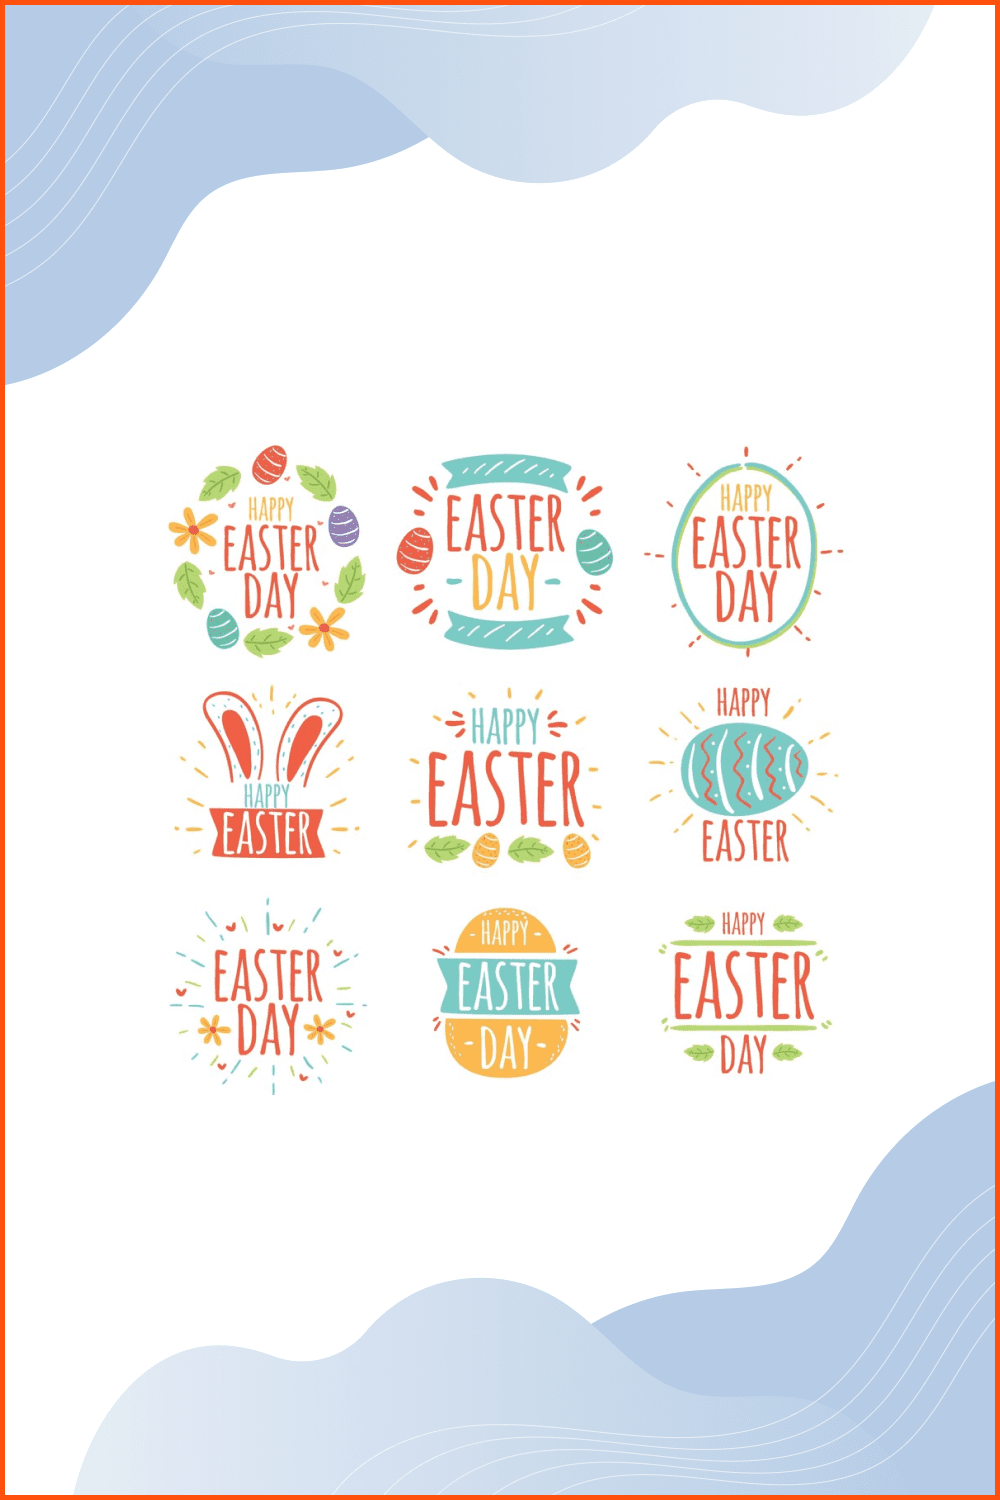 Easter day badges.